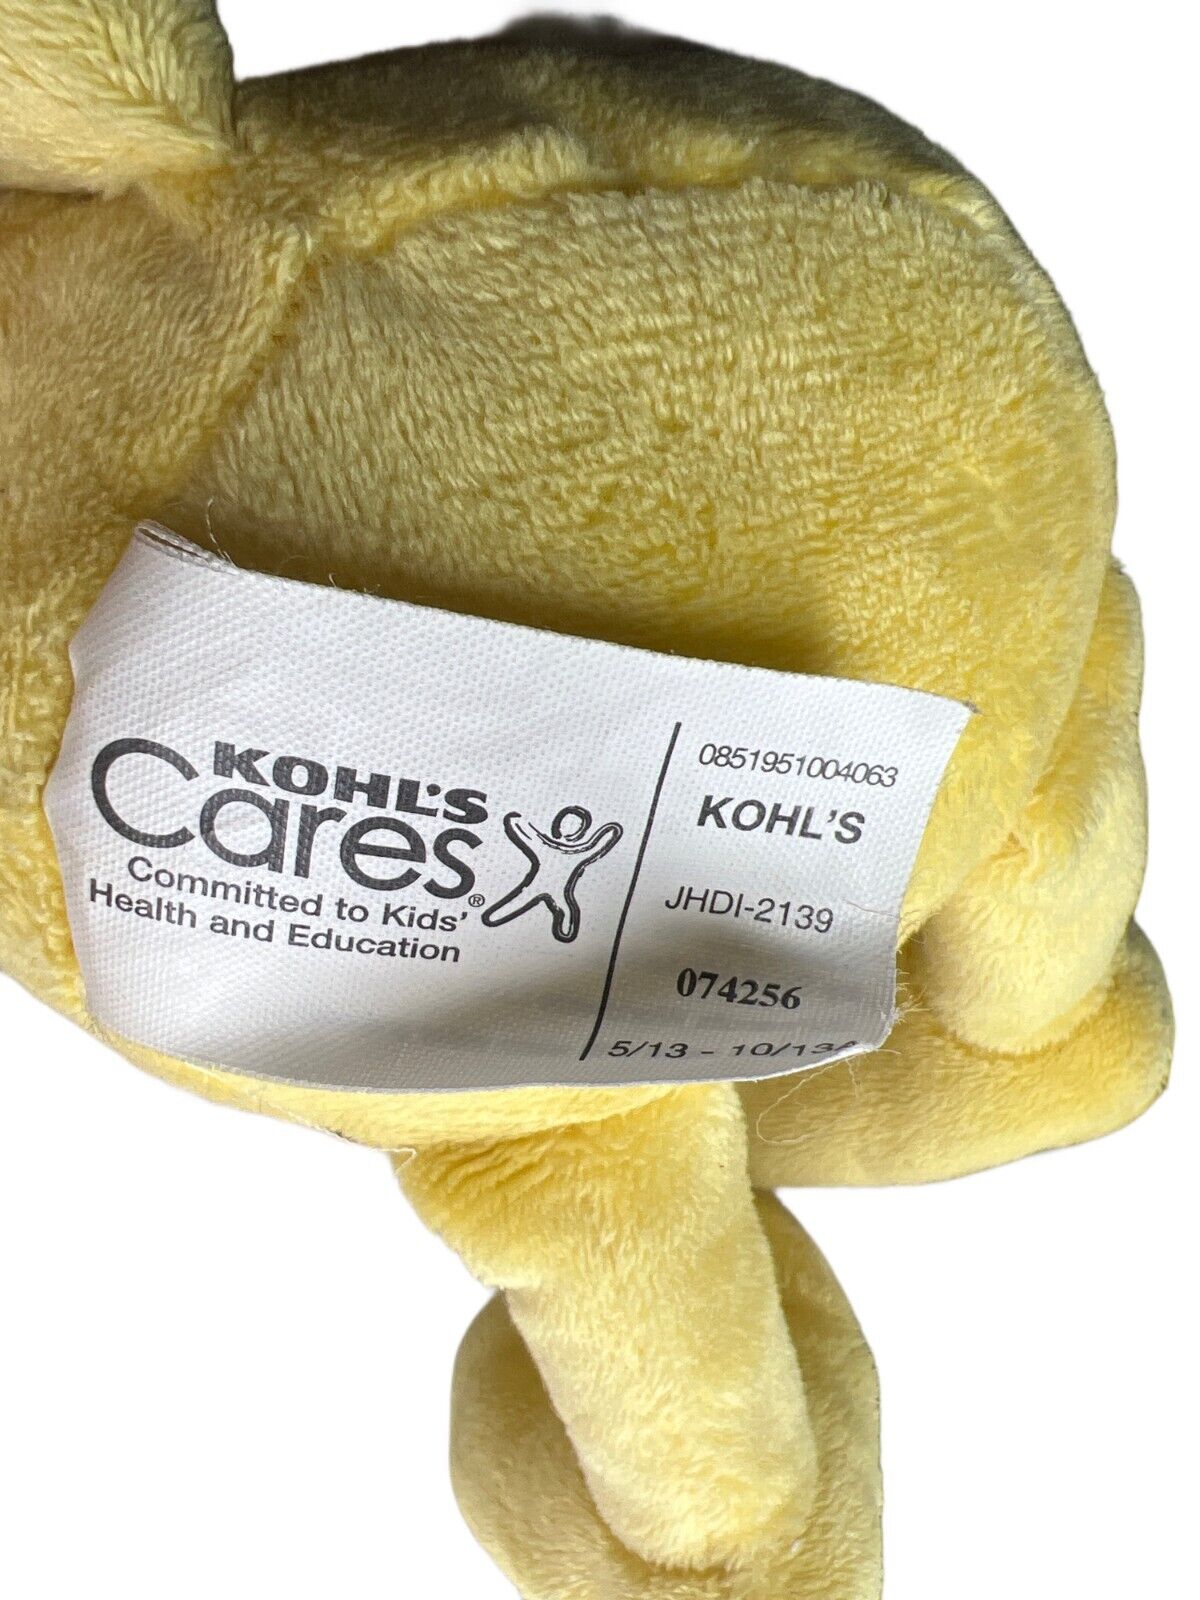 Kohls Cares 12” Woodstock Plush Peanuts Yellow Bird Stuffed Toy Snoopy FAST Ship